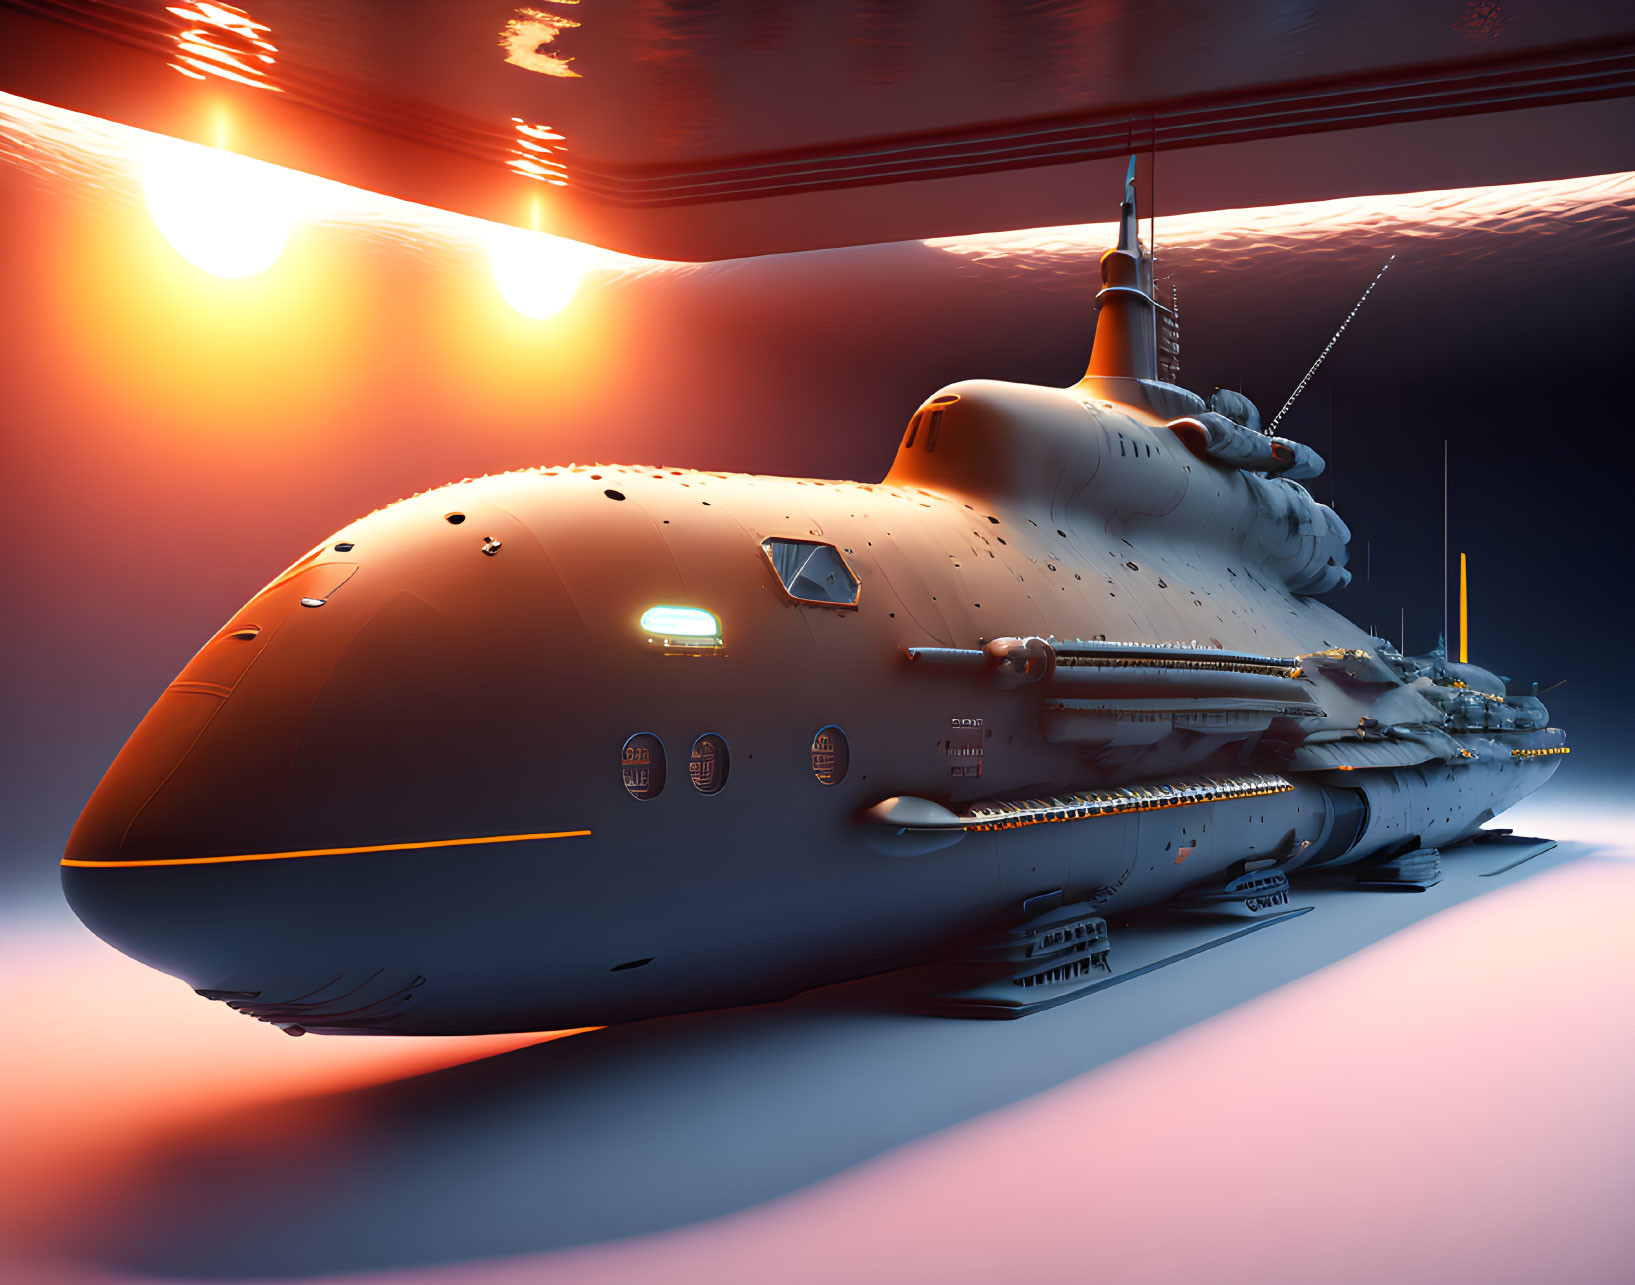 Sleek Futuristic Submarine with Multiple Hull Features Underwater